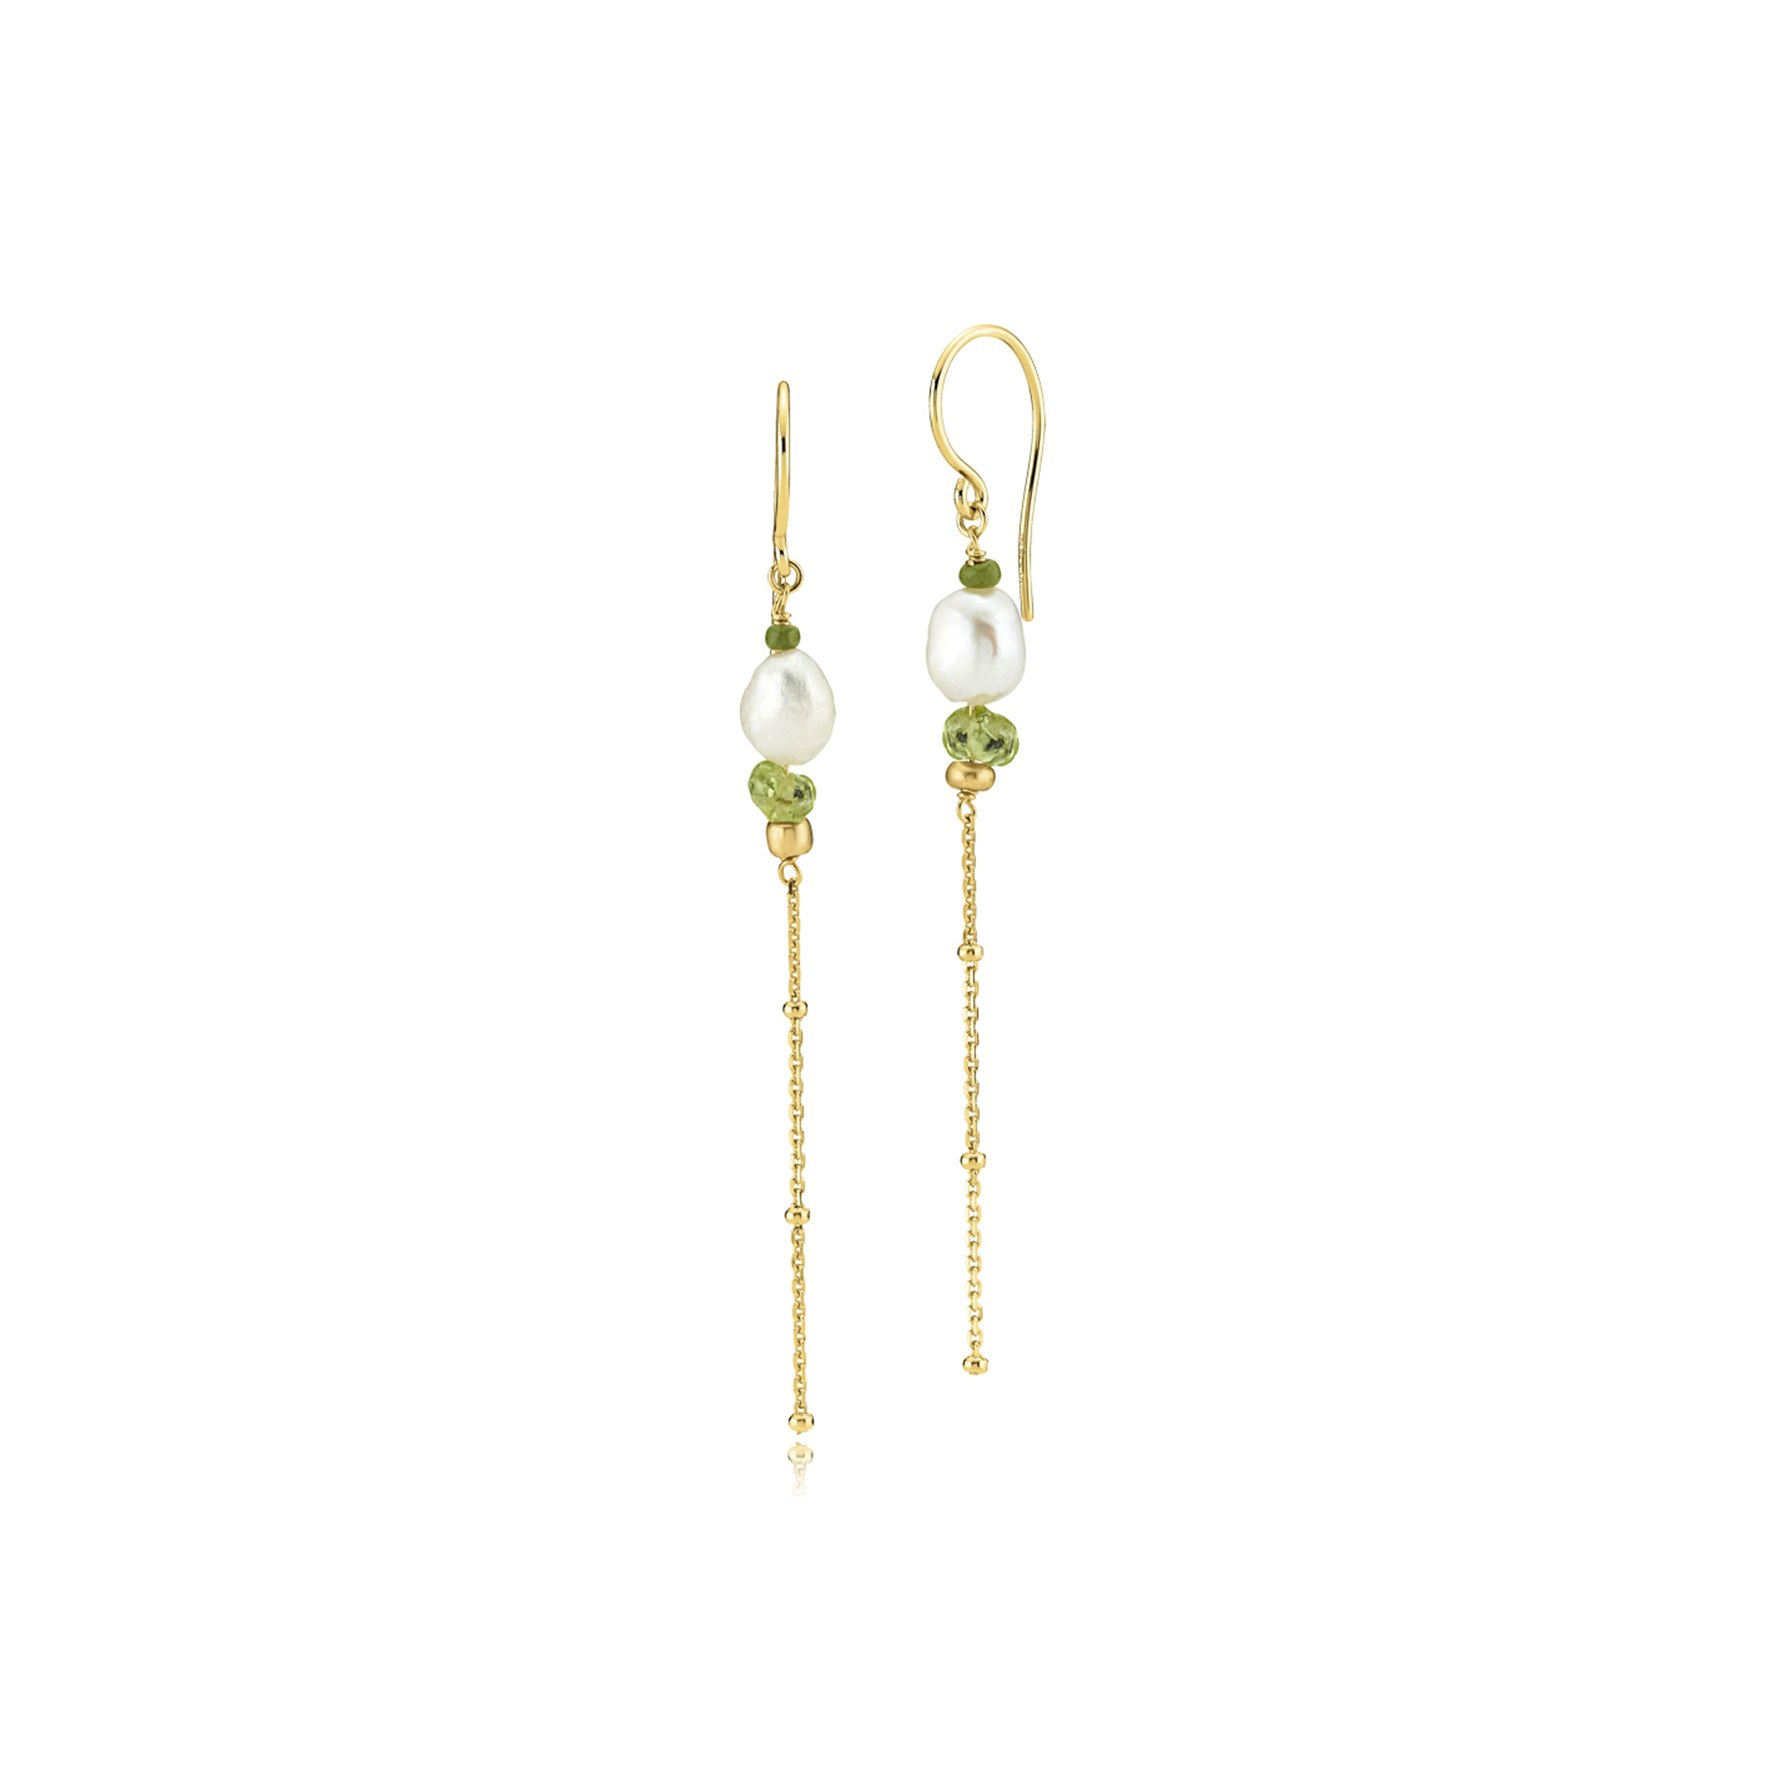 Beach Earrings Green With Pearl von Sistie in Vergoldet-Silber Sterling 925